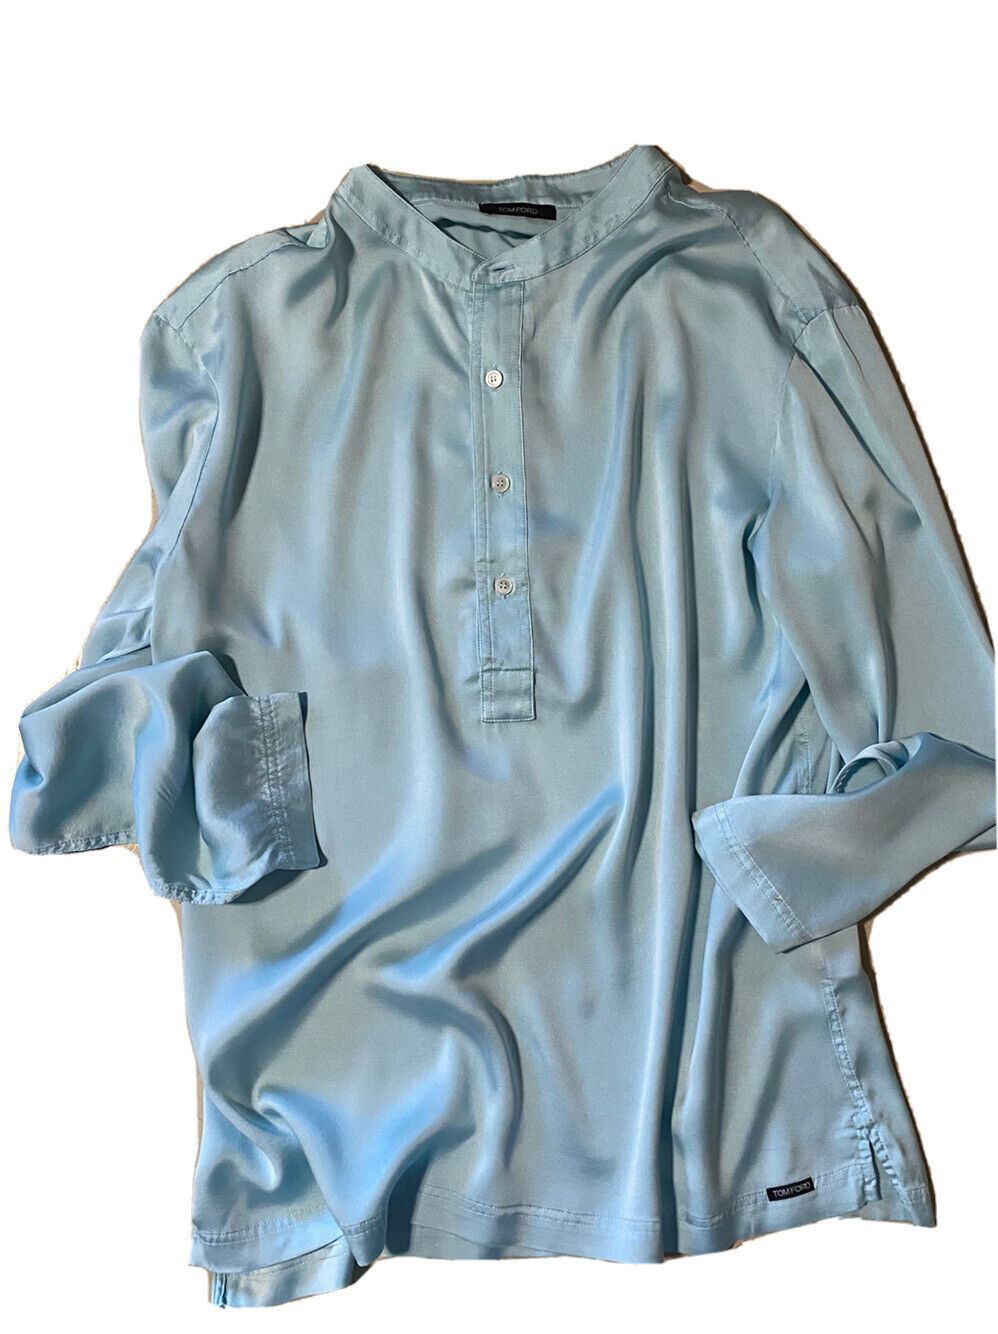 Neu mit Etikett: 790 $ TOM FORD Herren-Henley-Seidenhemd Blau Italien